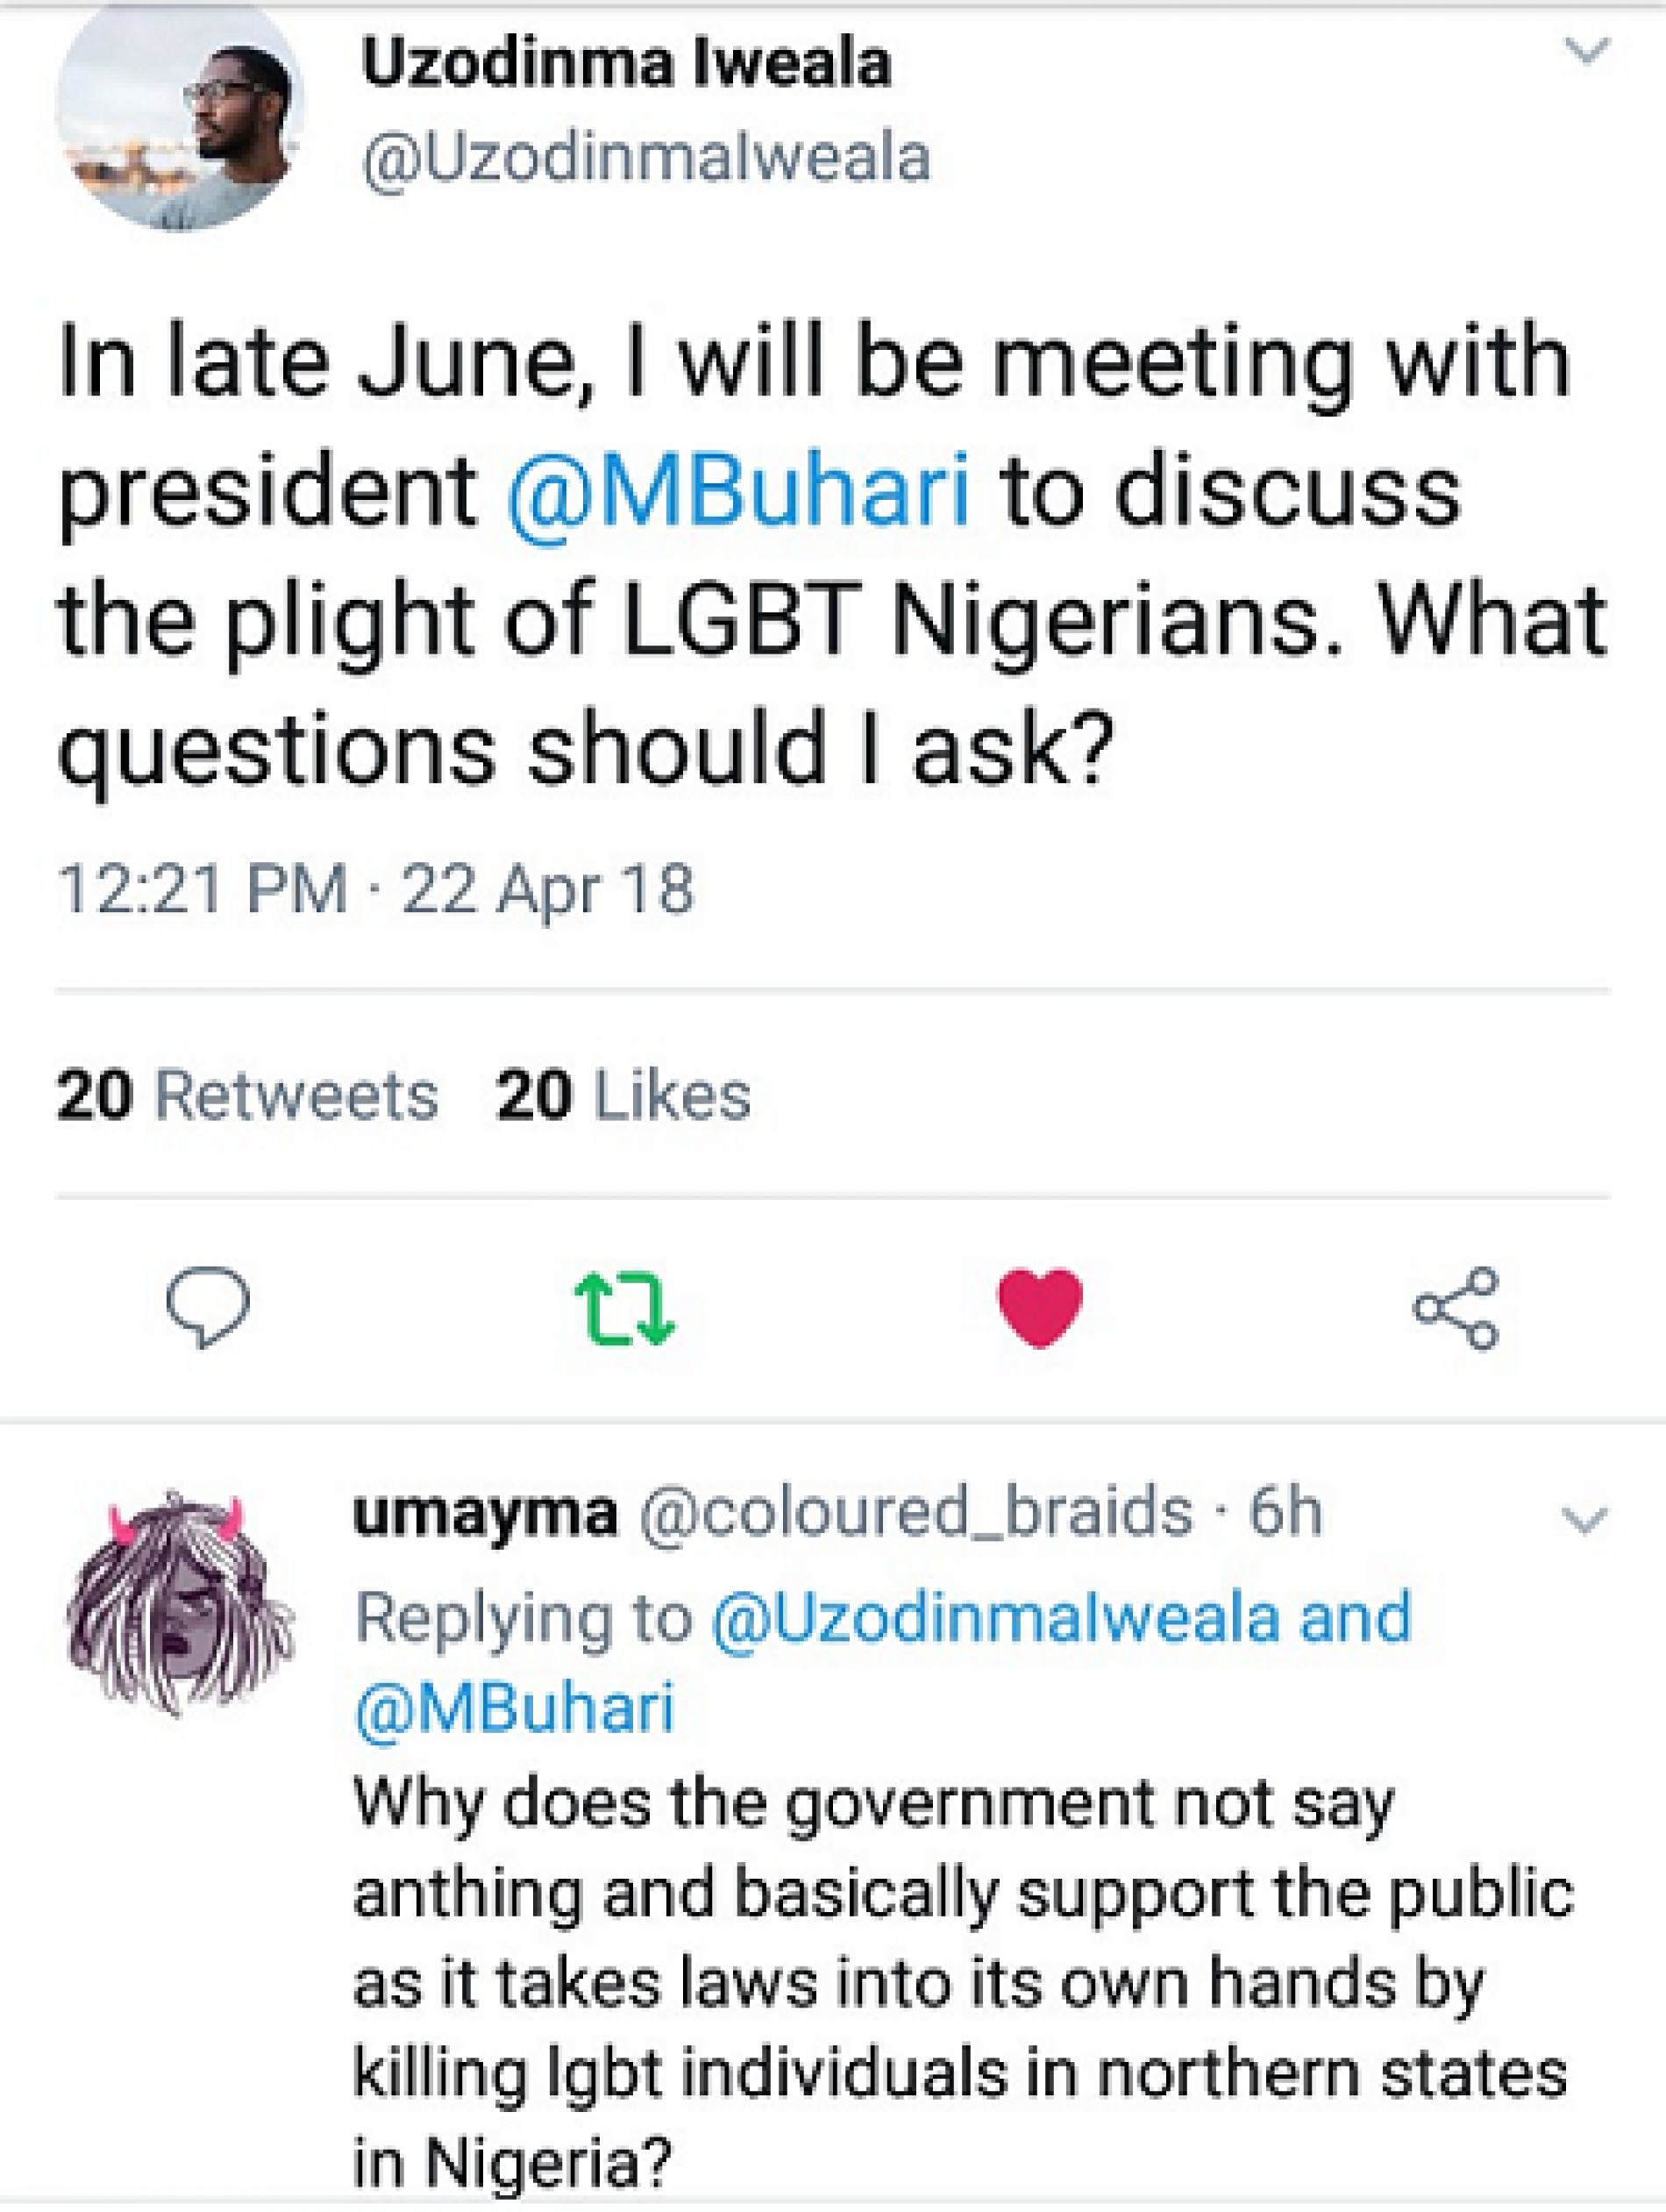 What Questions Should Uzodinma Iweala Ask President Buhari Concerning LGBT Nigerians?